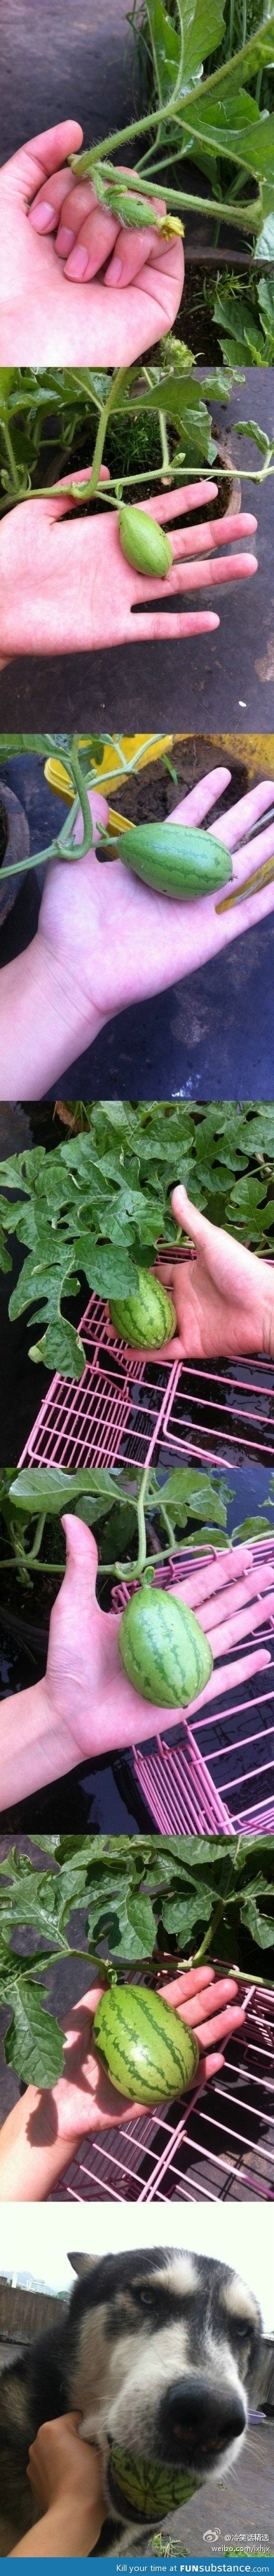 Growing a watermelon